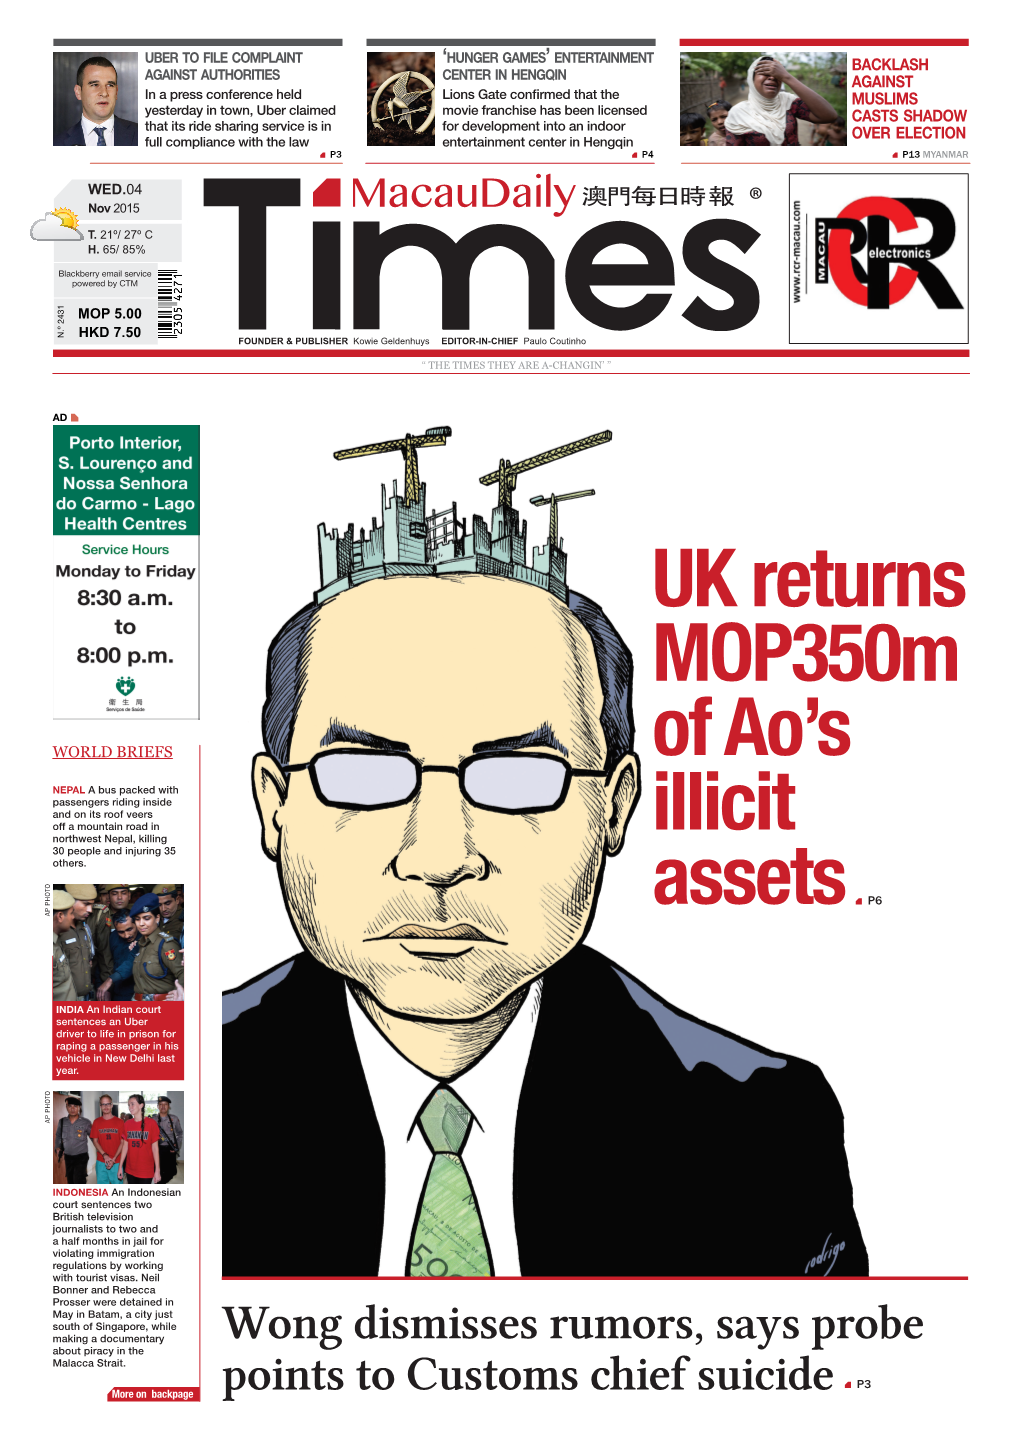 UK Returns Mop350m of Ao's Illicit Assets P6